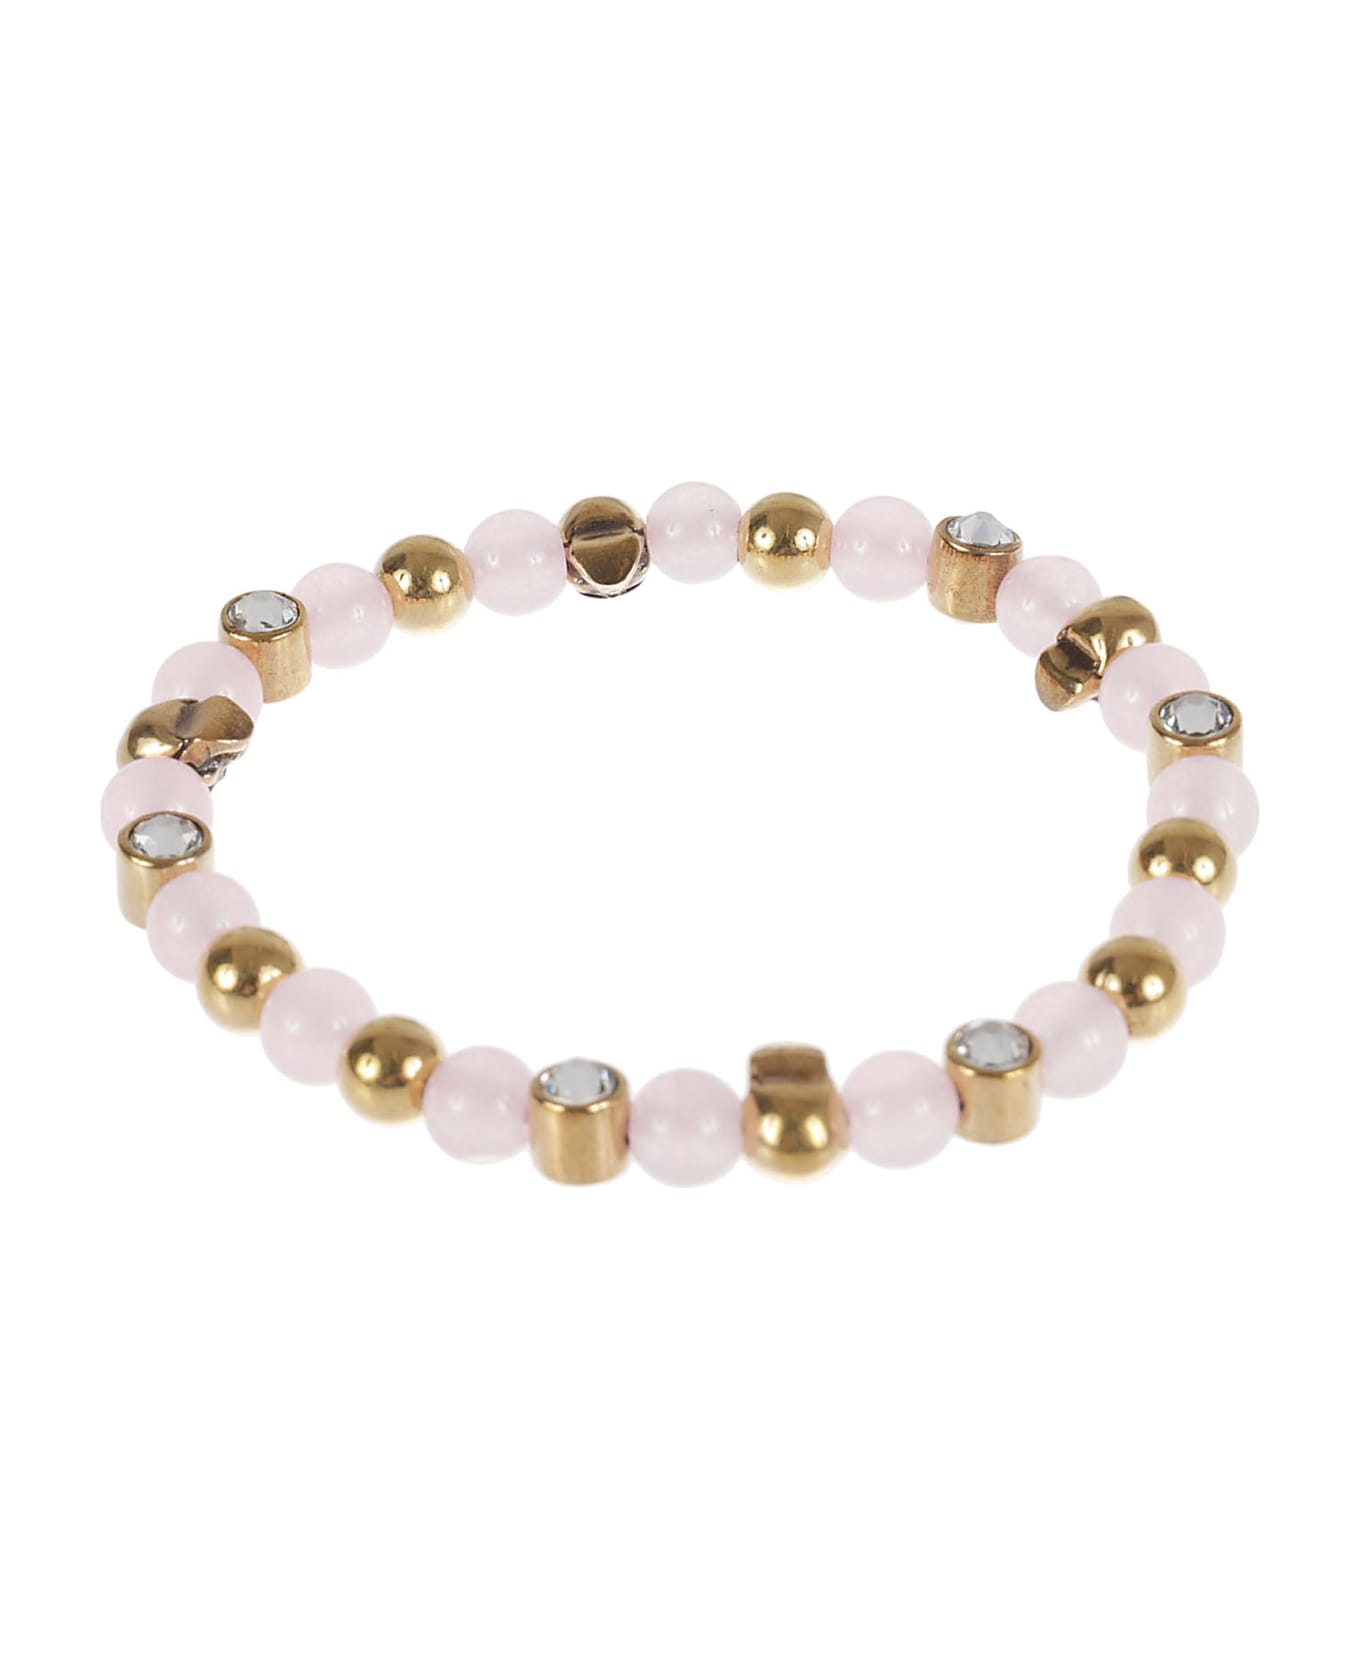 Alexander McQueen Bead Necklace - Antique Gold/Pink